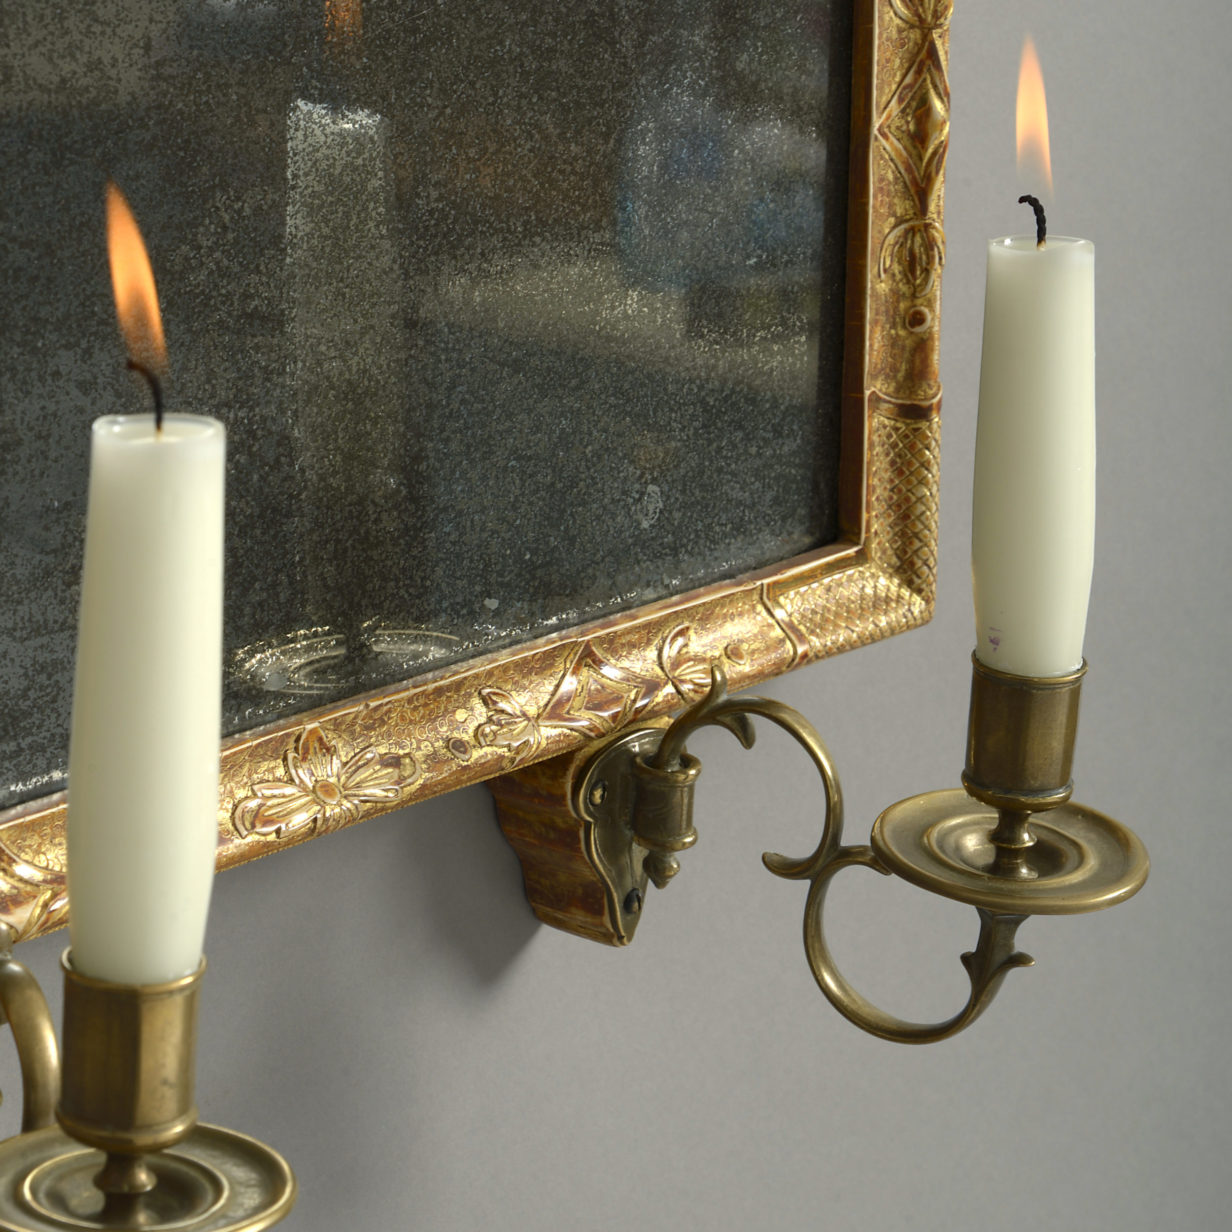 An 18th century george i period gilt gesso girandole mirror